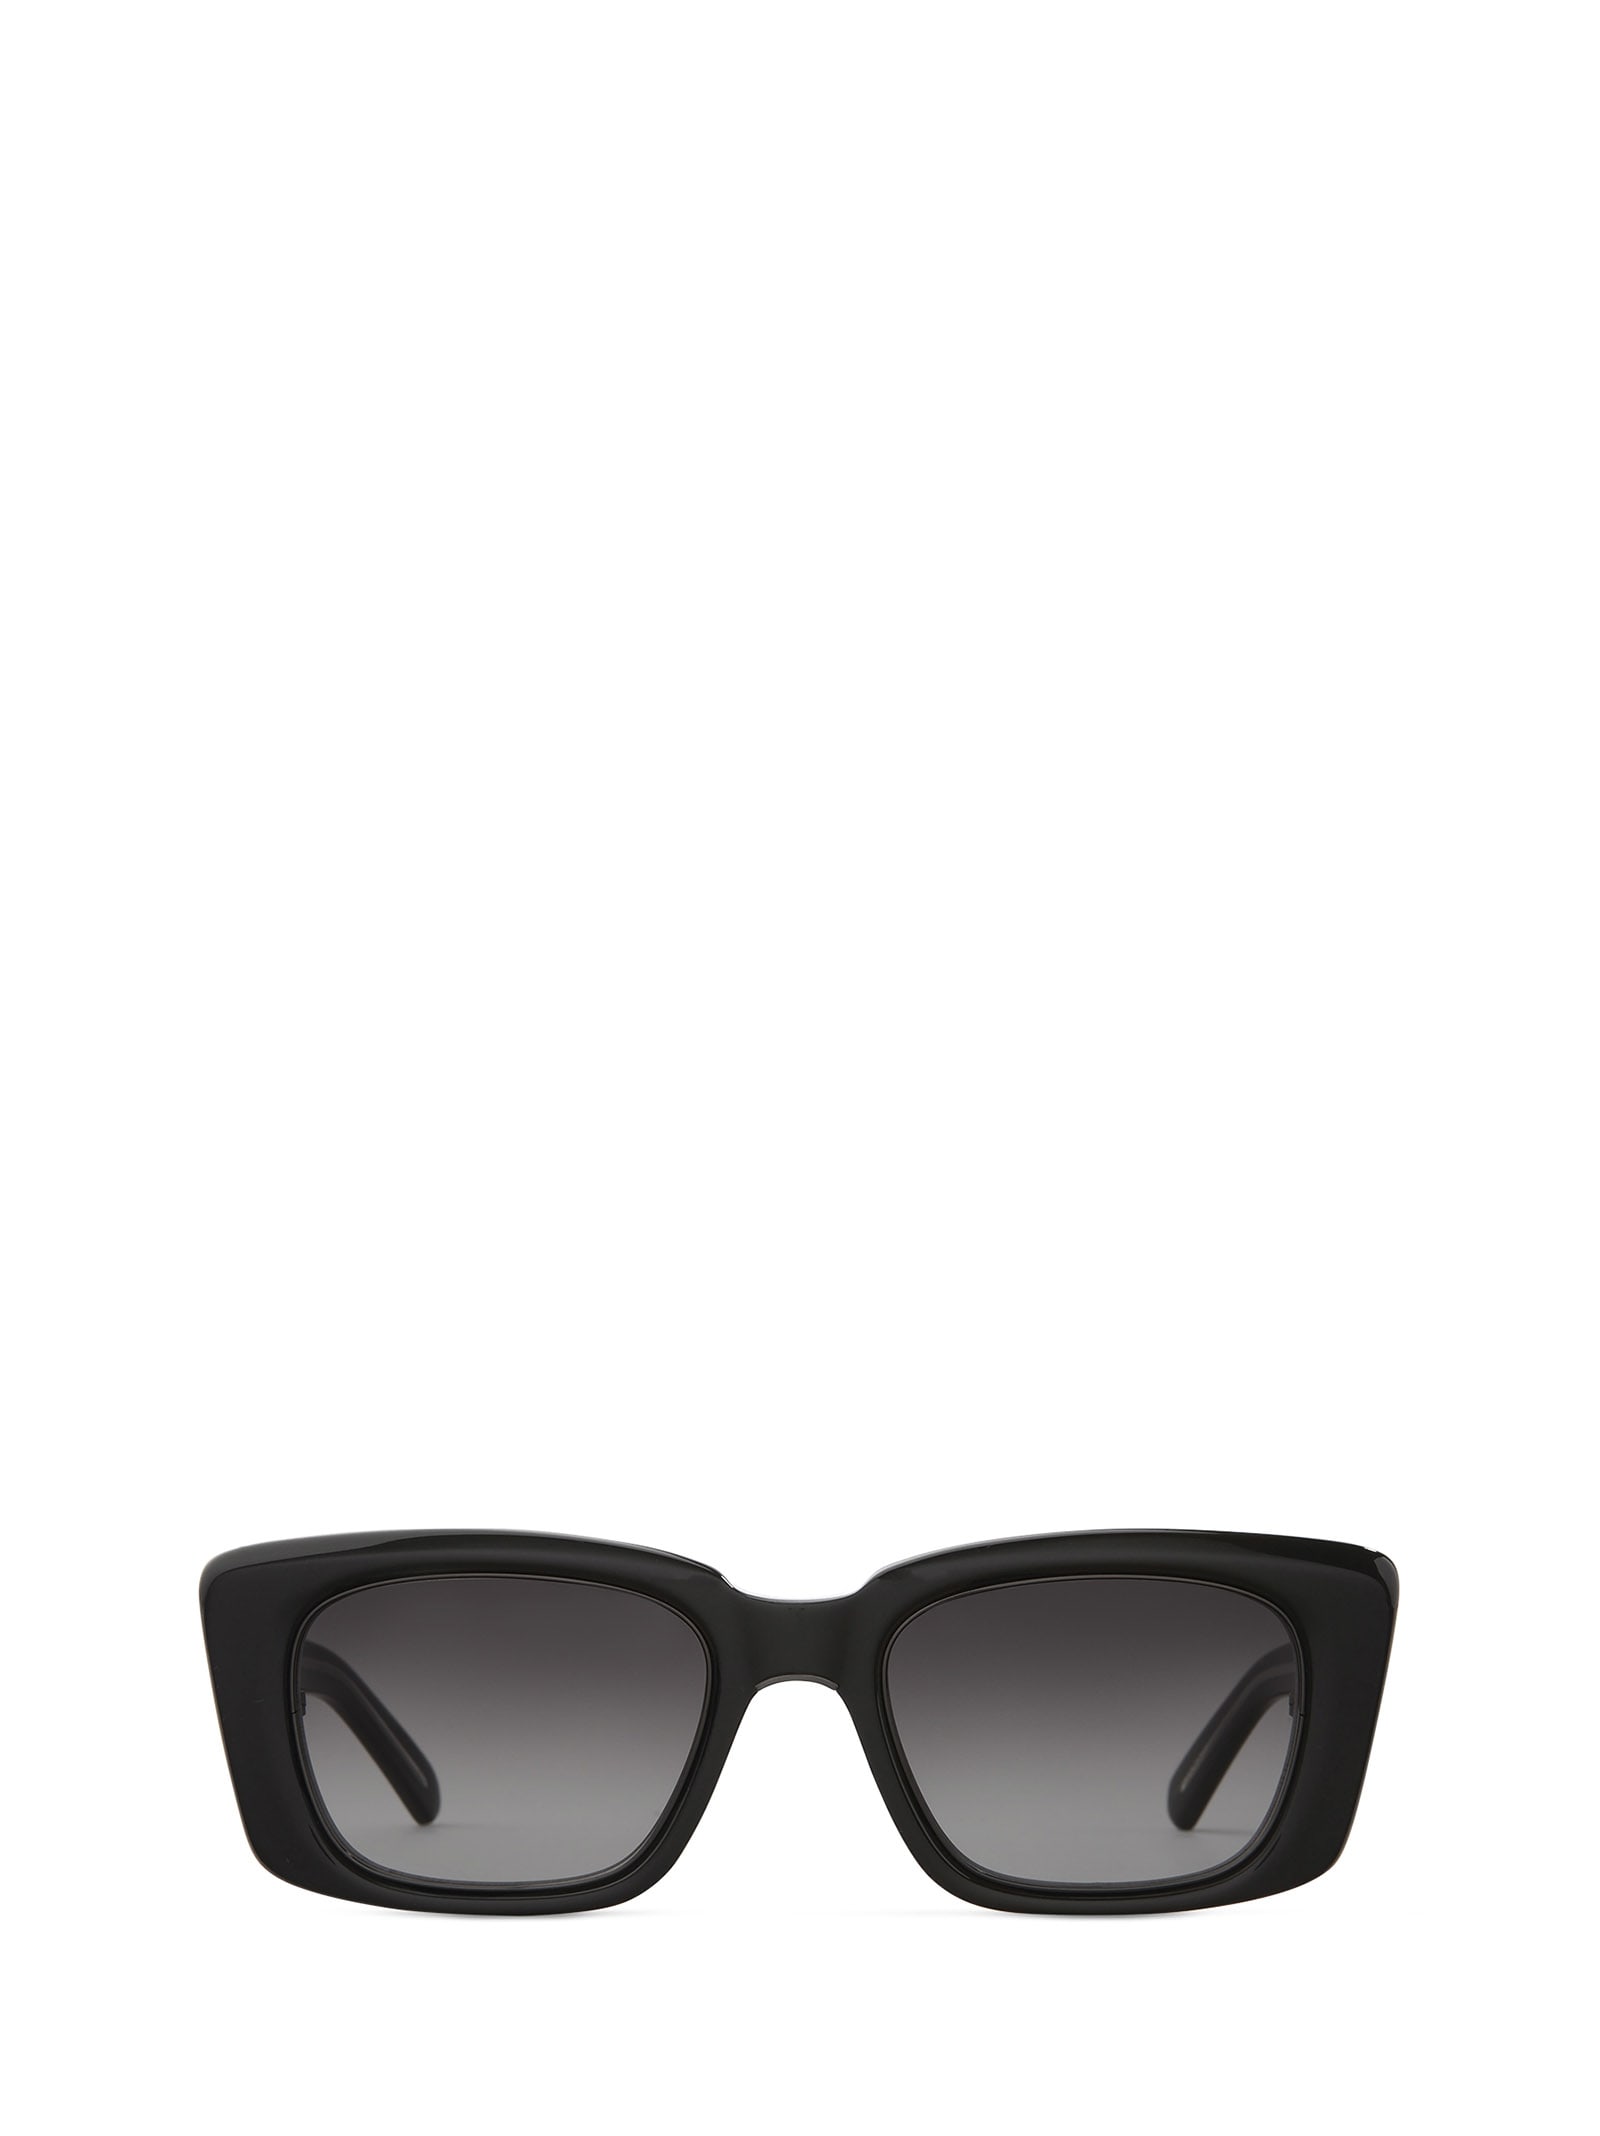 Mr Leight Carman S Black-gunmetal Sunglasses